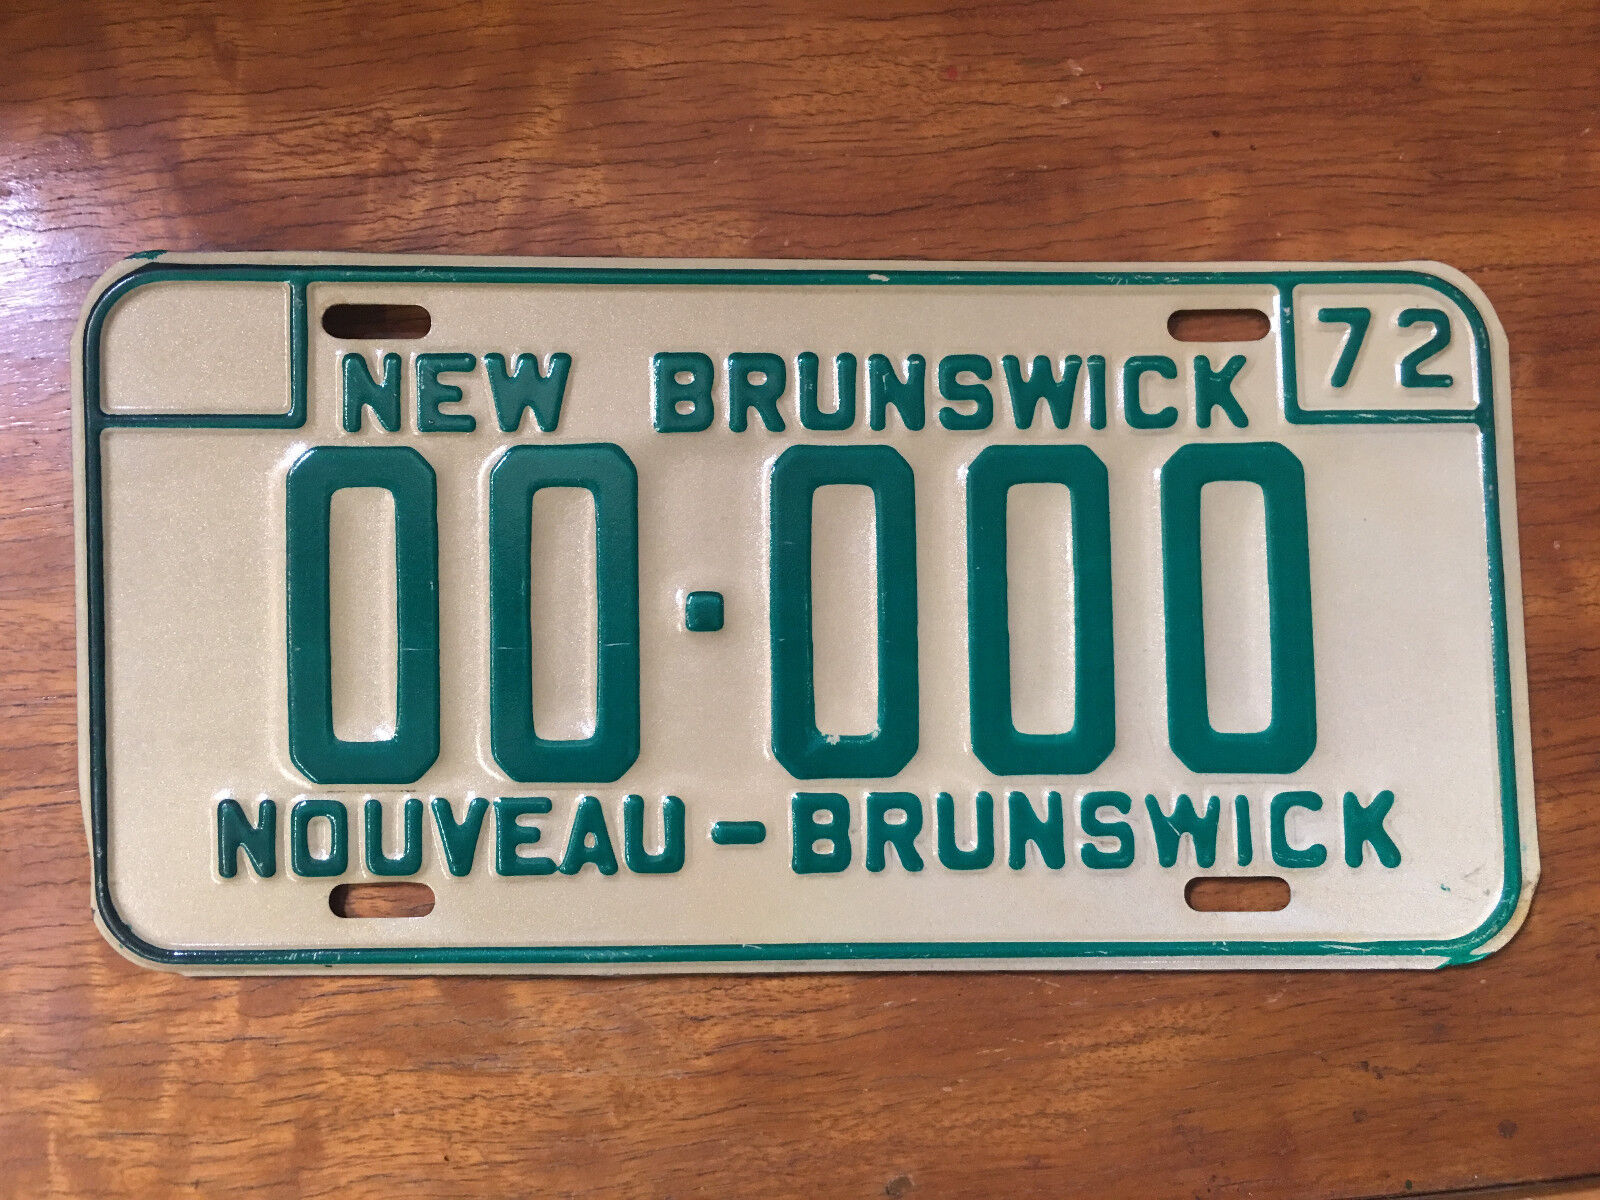 Original 1972 New Brunswick License Plate from 20th Century-Fox Archives